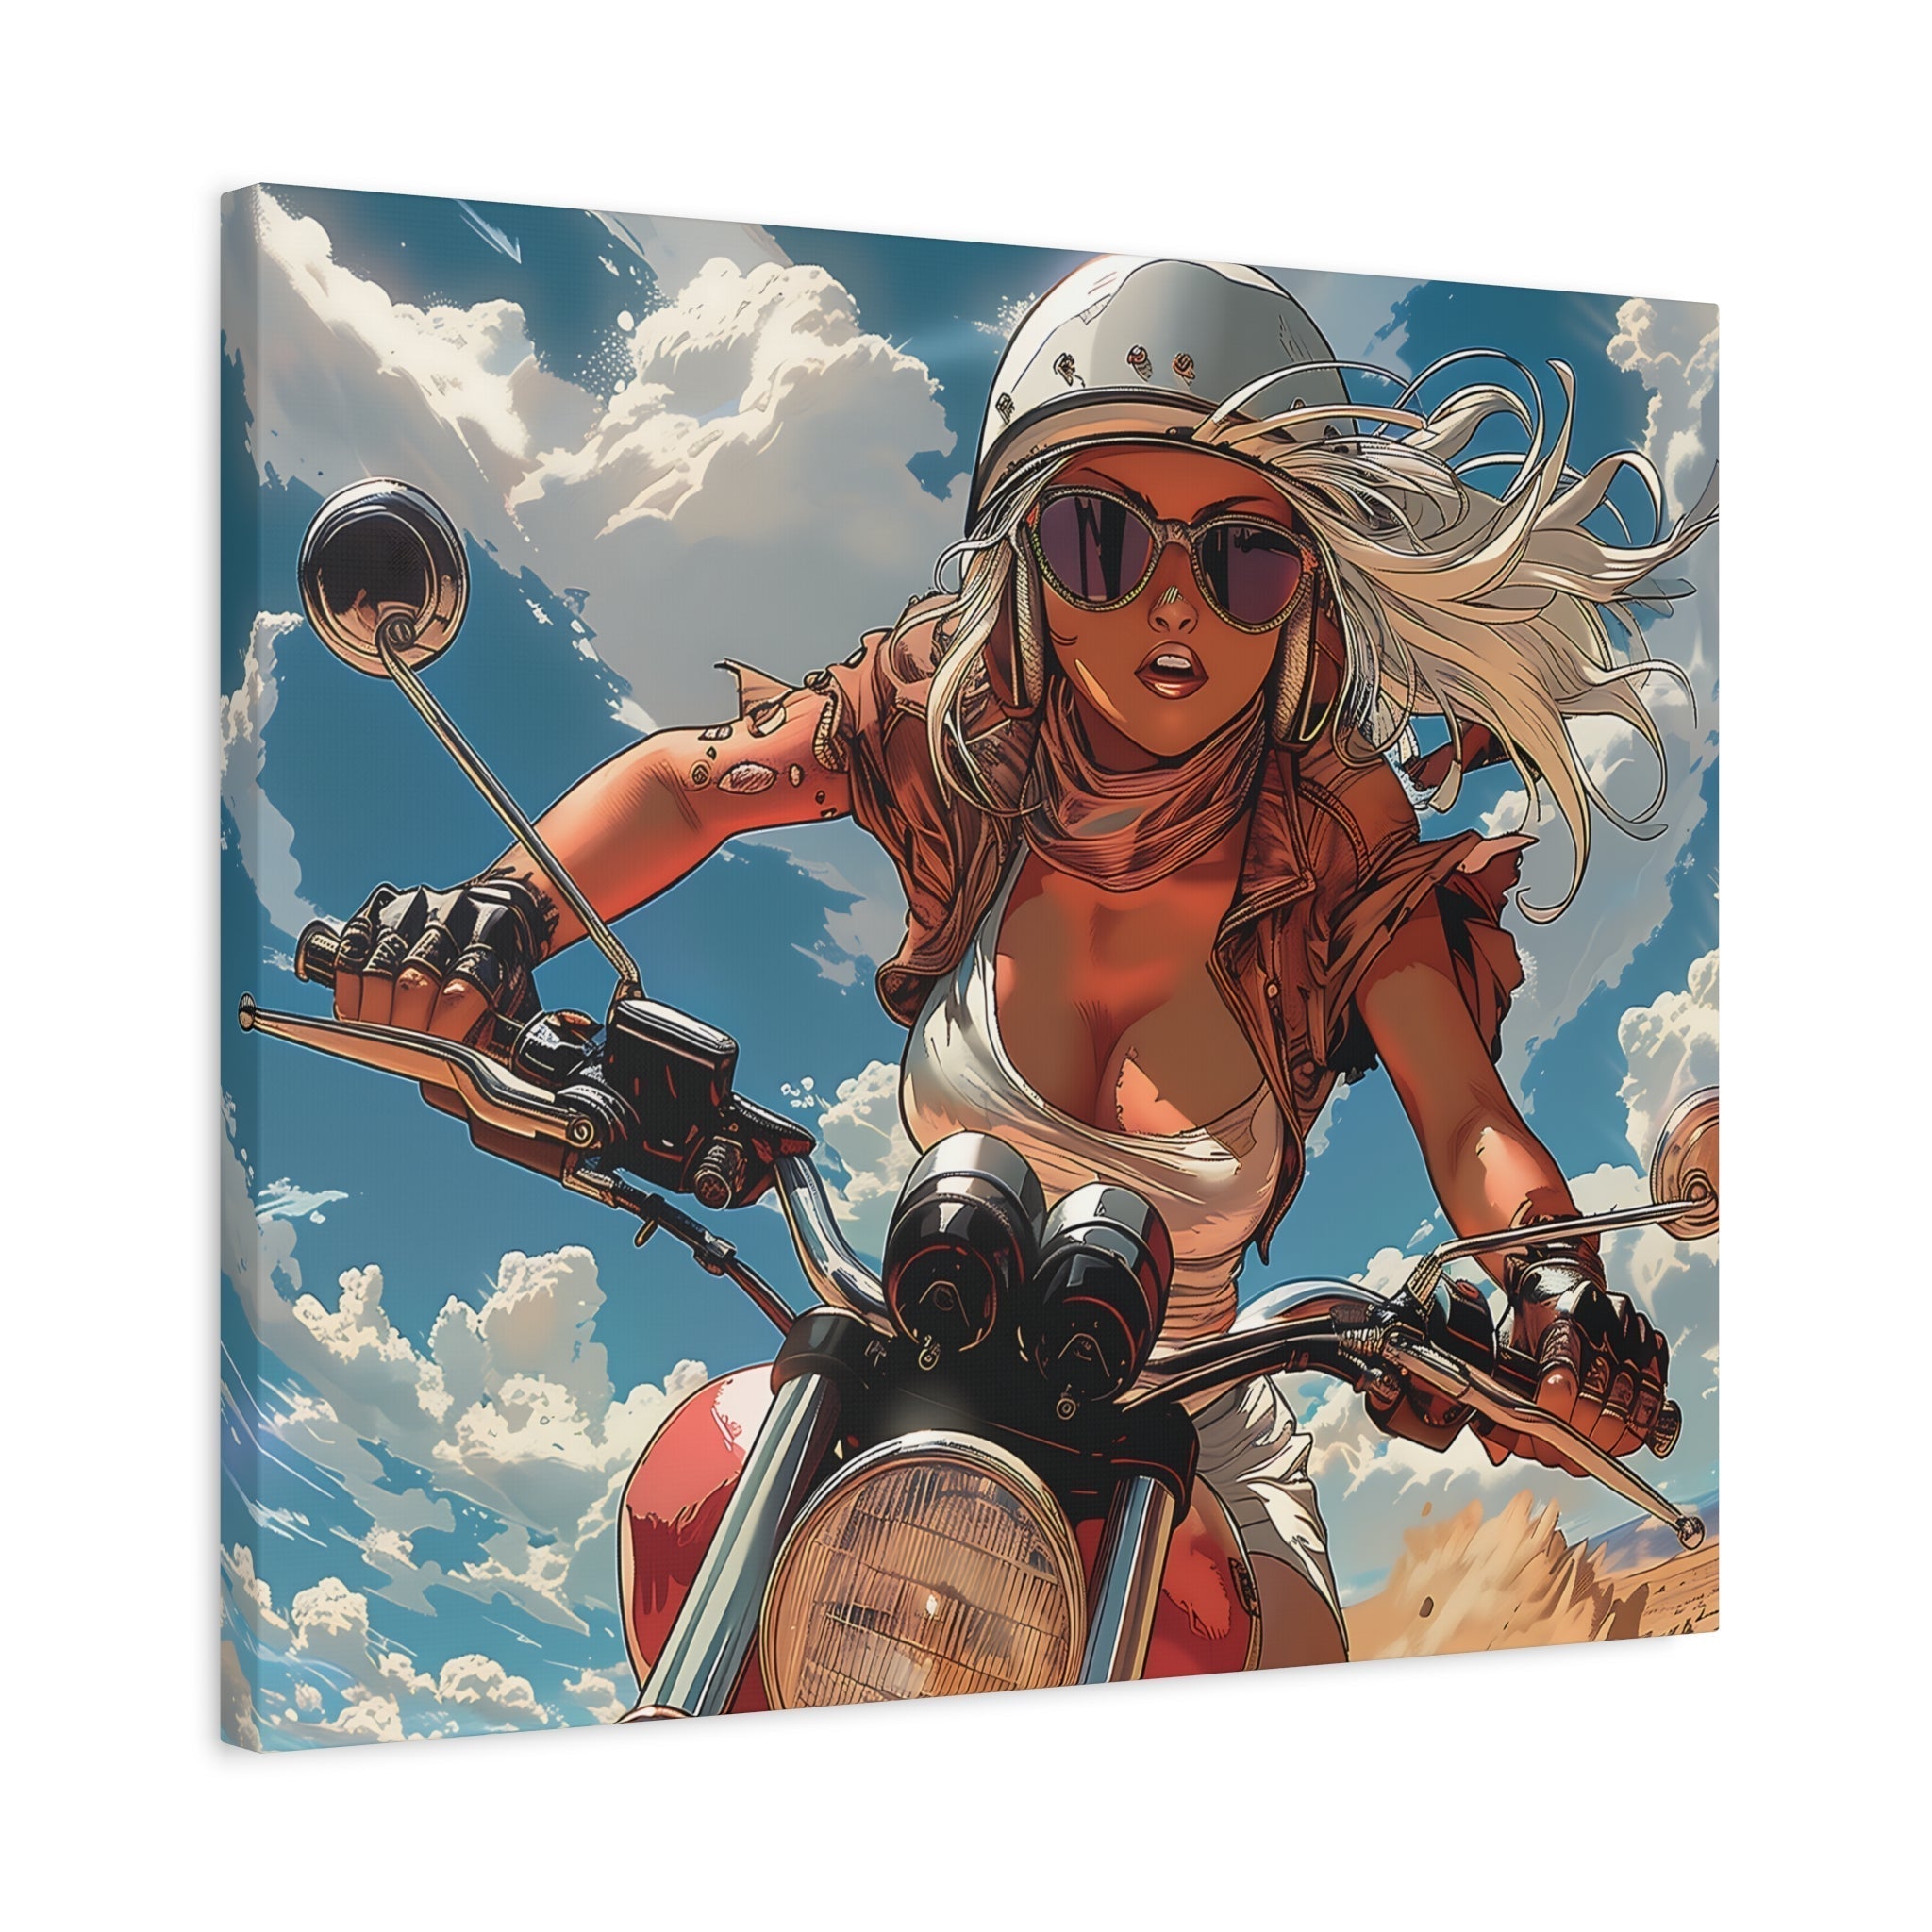 Motorrad-Art, Fotoleinwand Motorradmotiv-Motorradfahrer-Manga-Anime-Niji-Steampunk